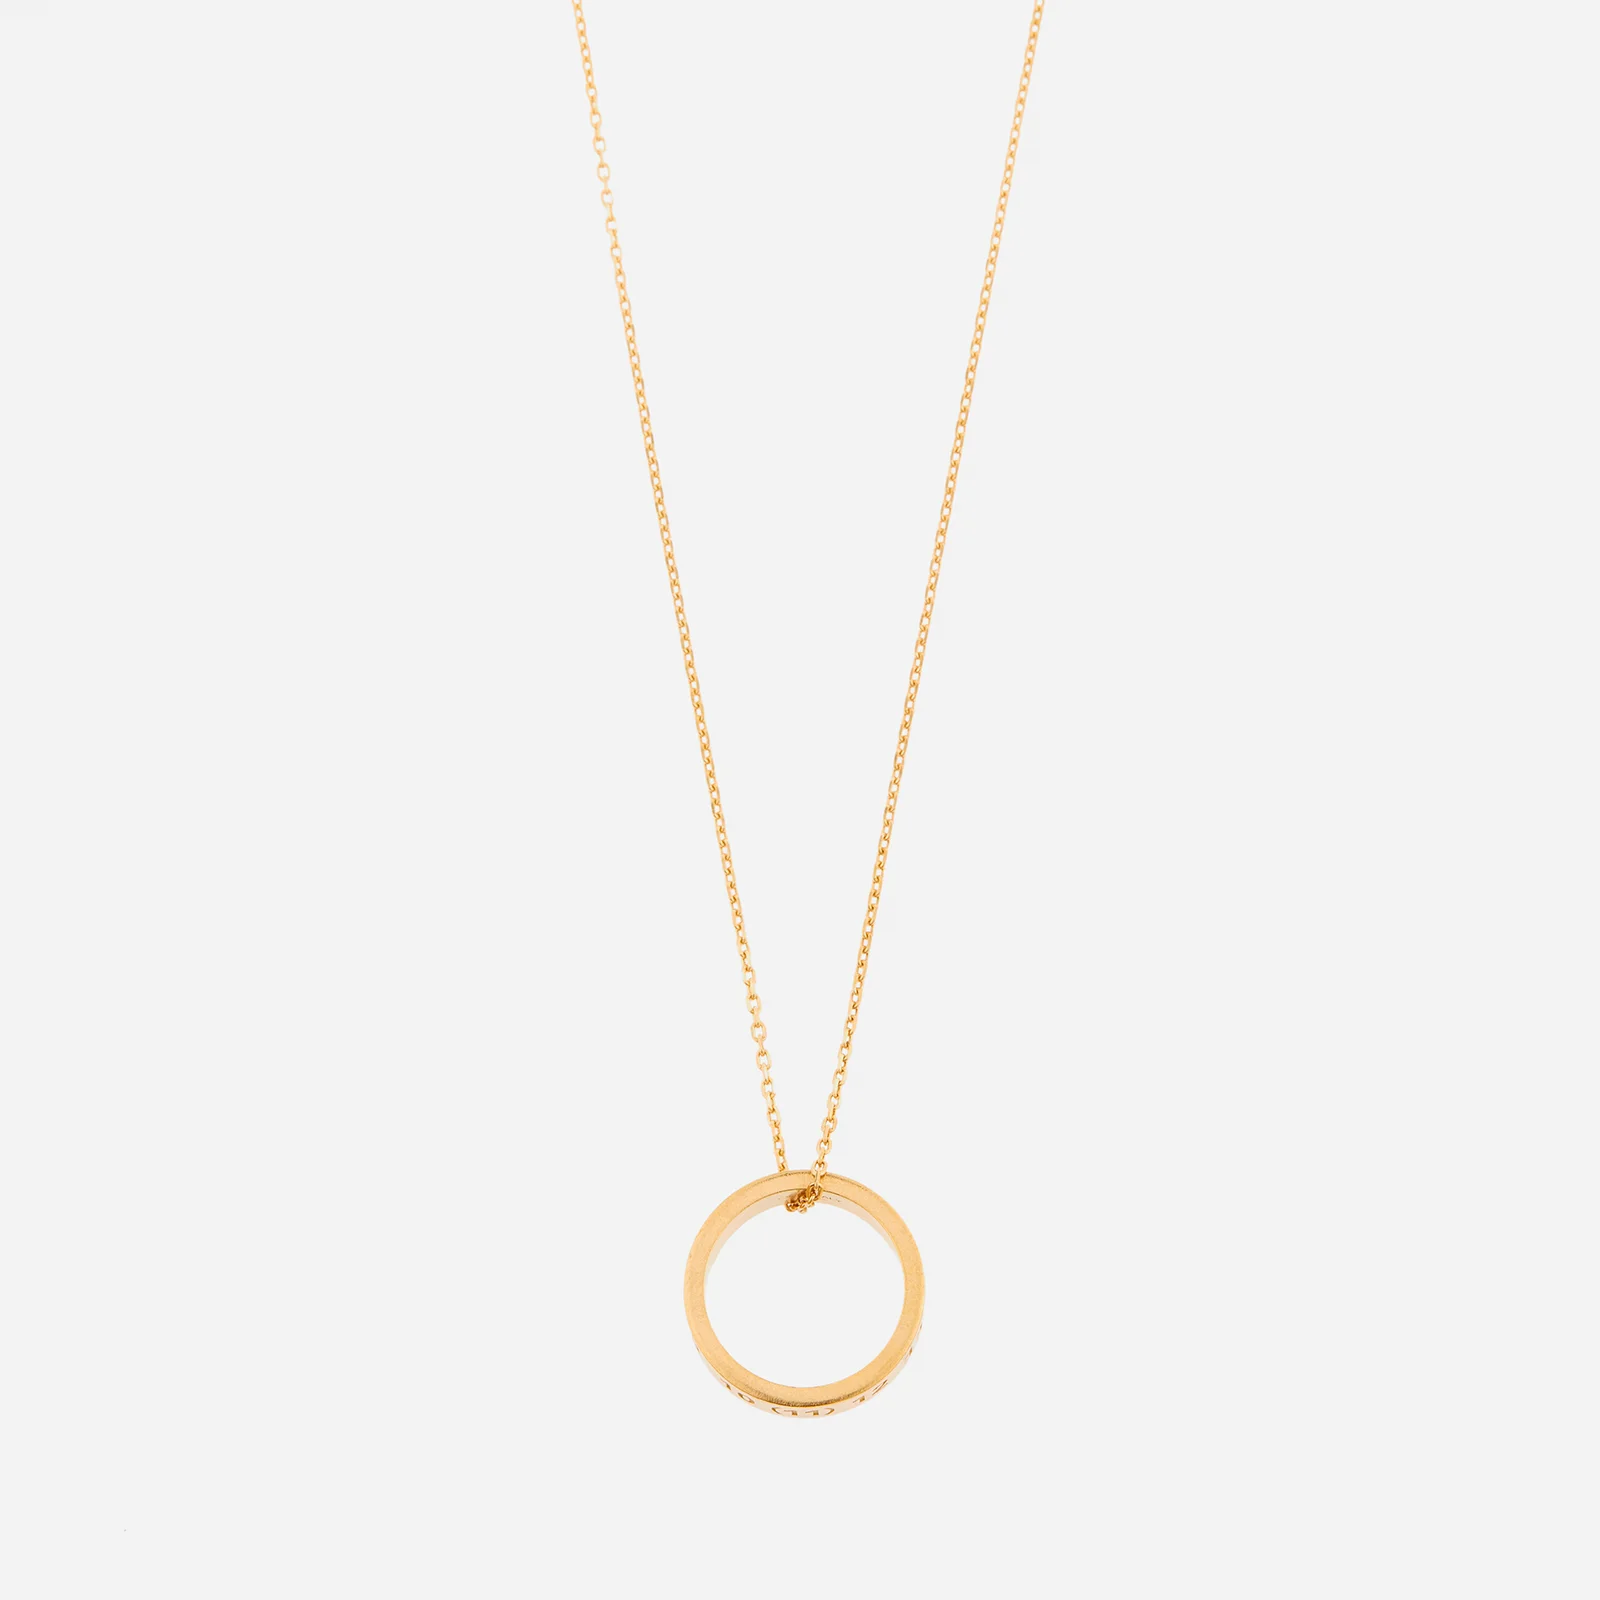 Maison Margiela Men's Ring Necklace - Yellow Gold Plating Image 1